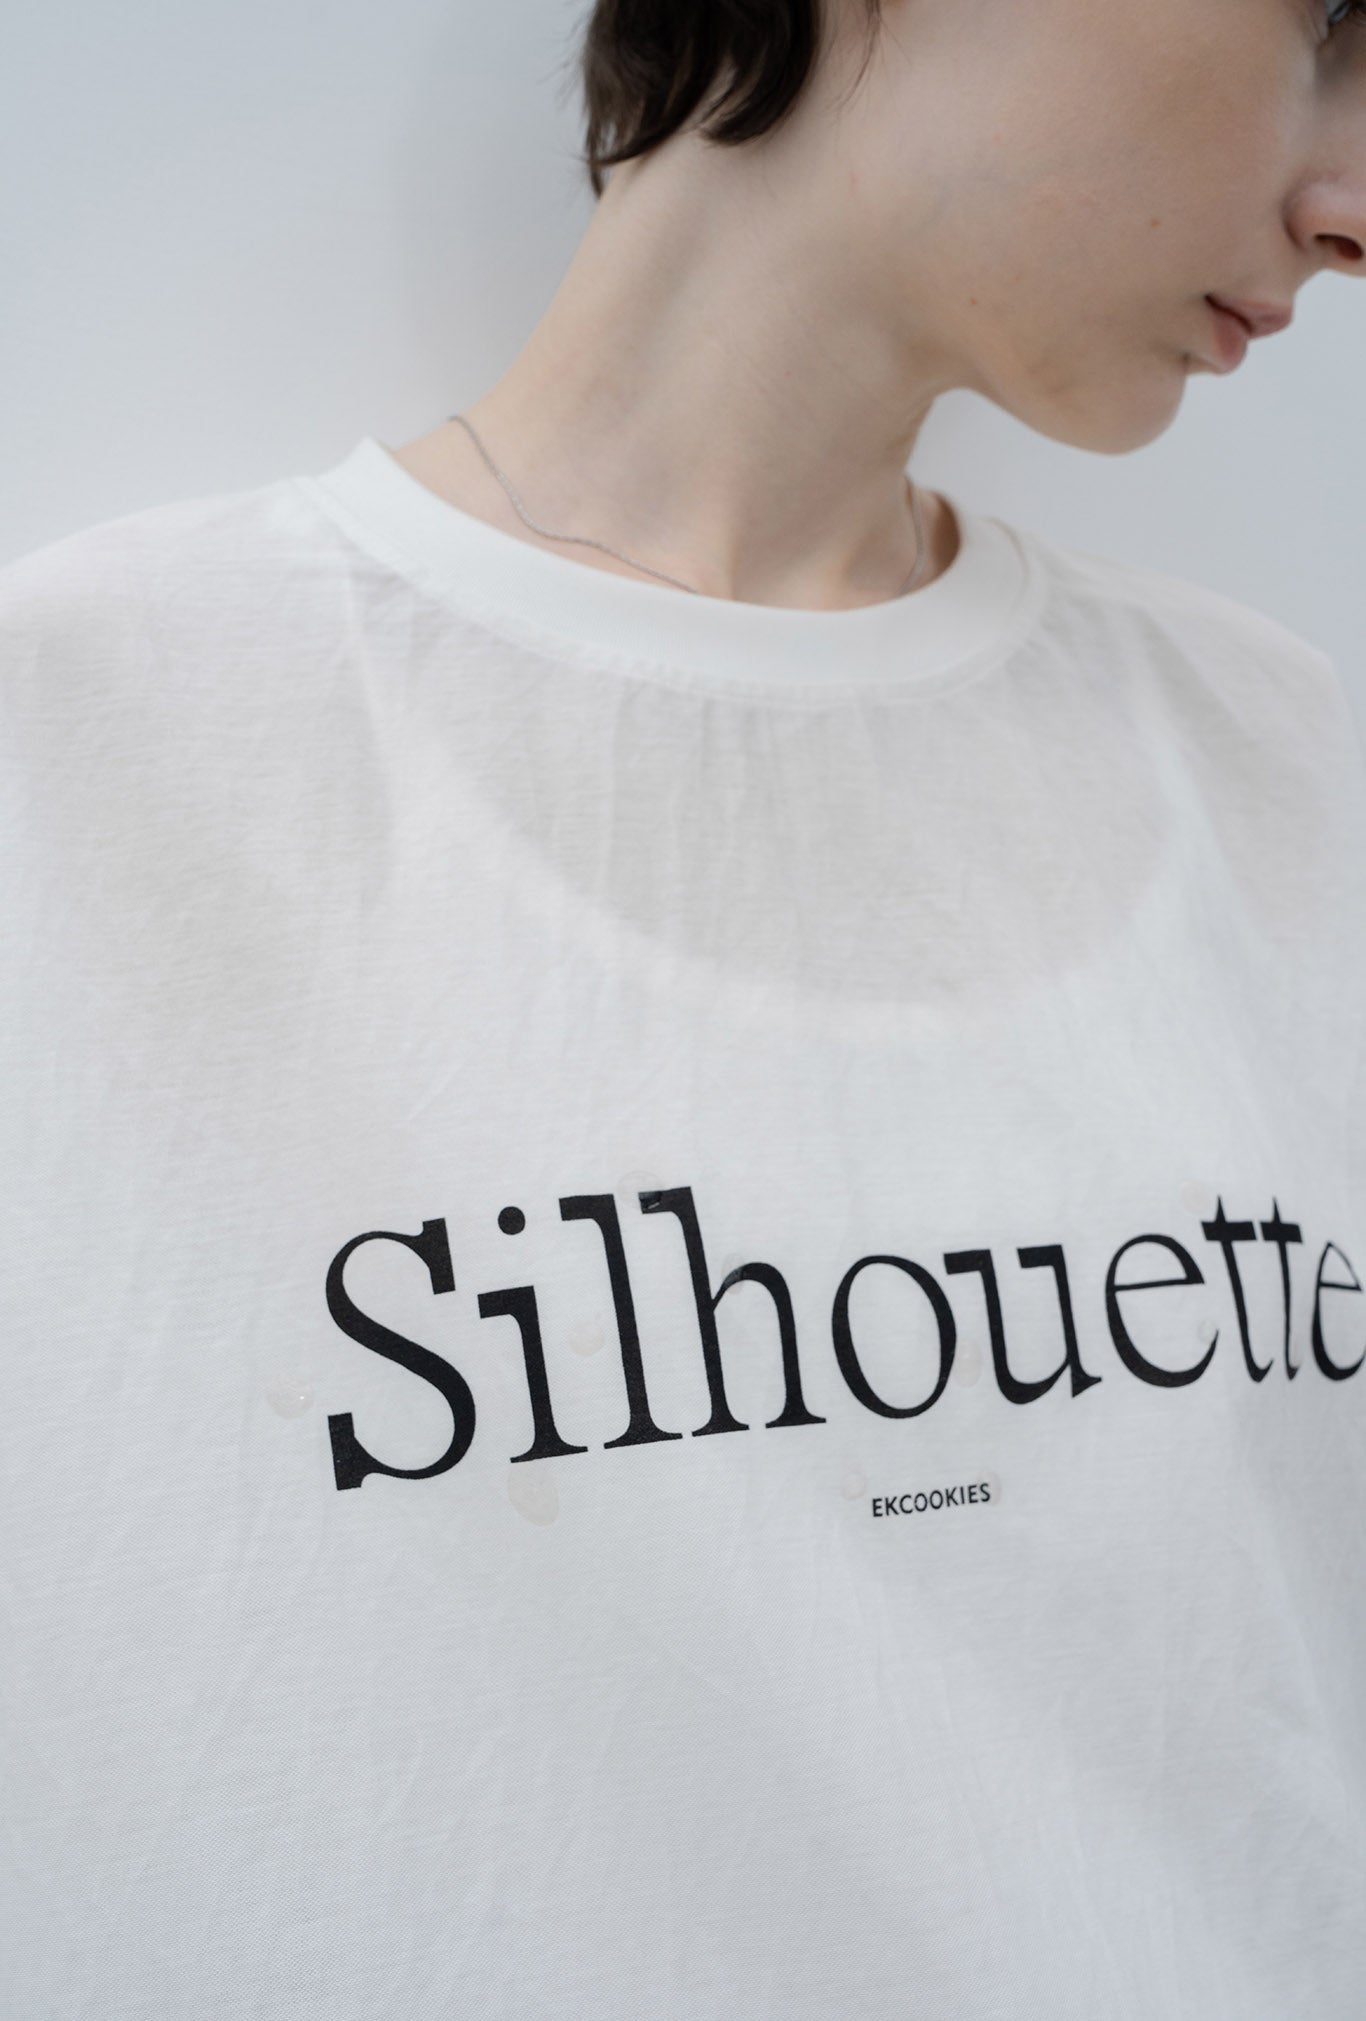 "silhouette" プリントカットソー / Tシャツ